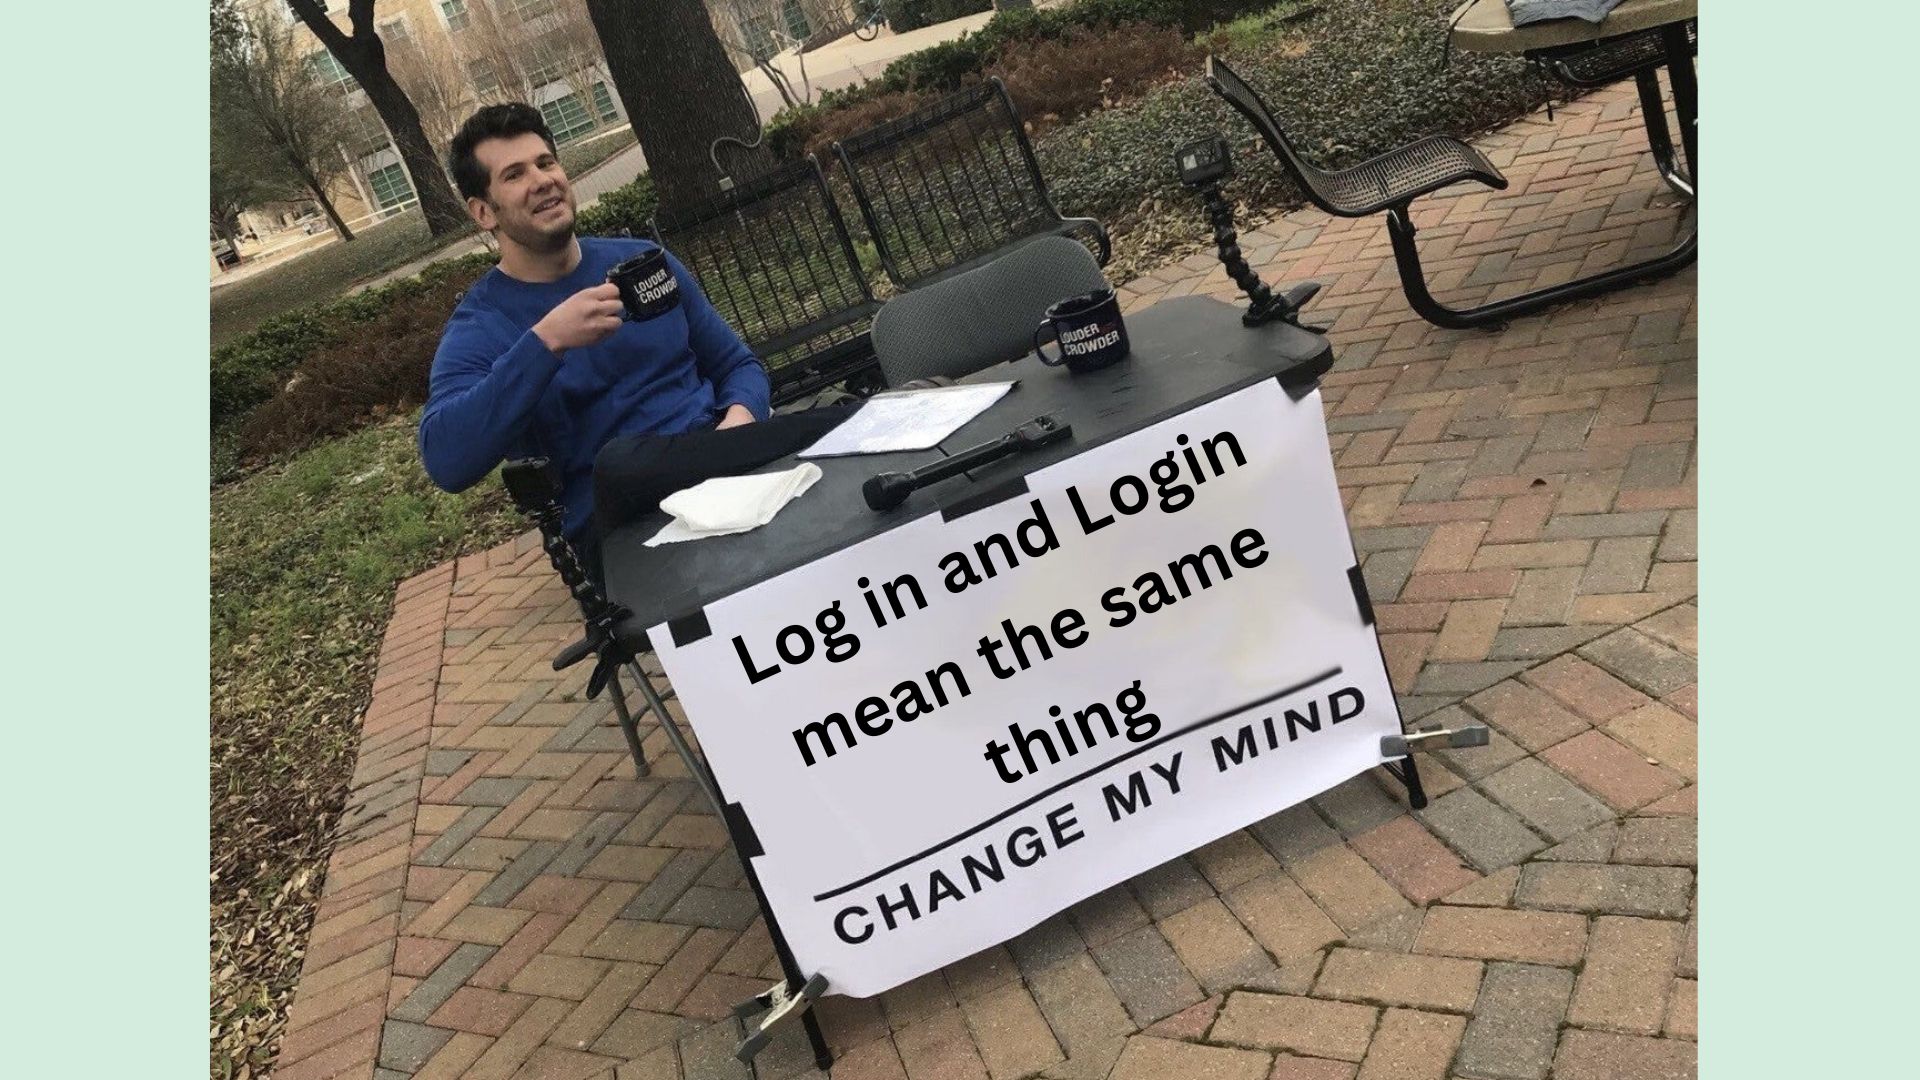 Login чи Log in